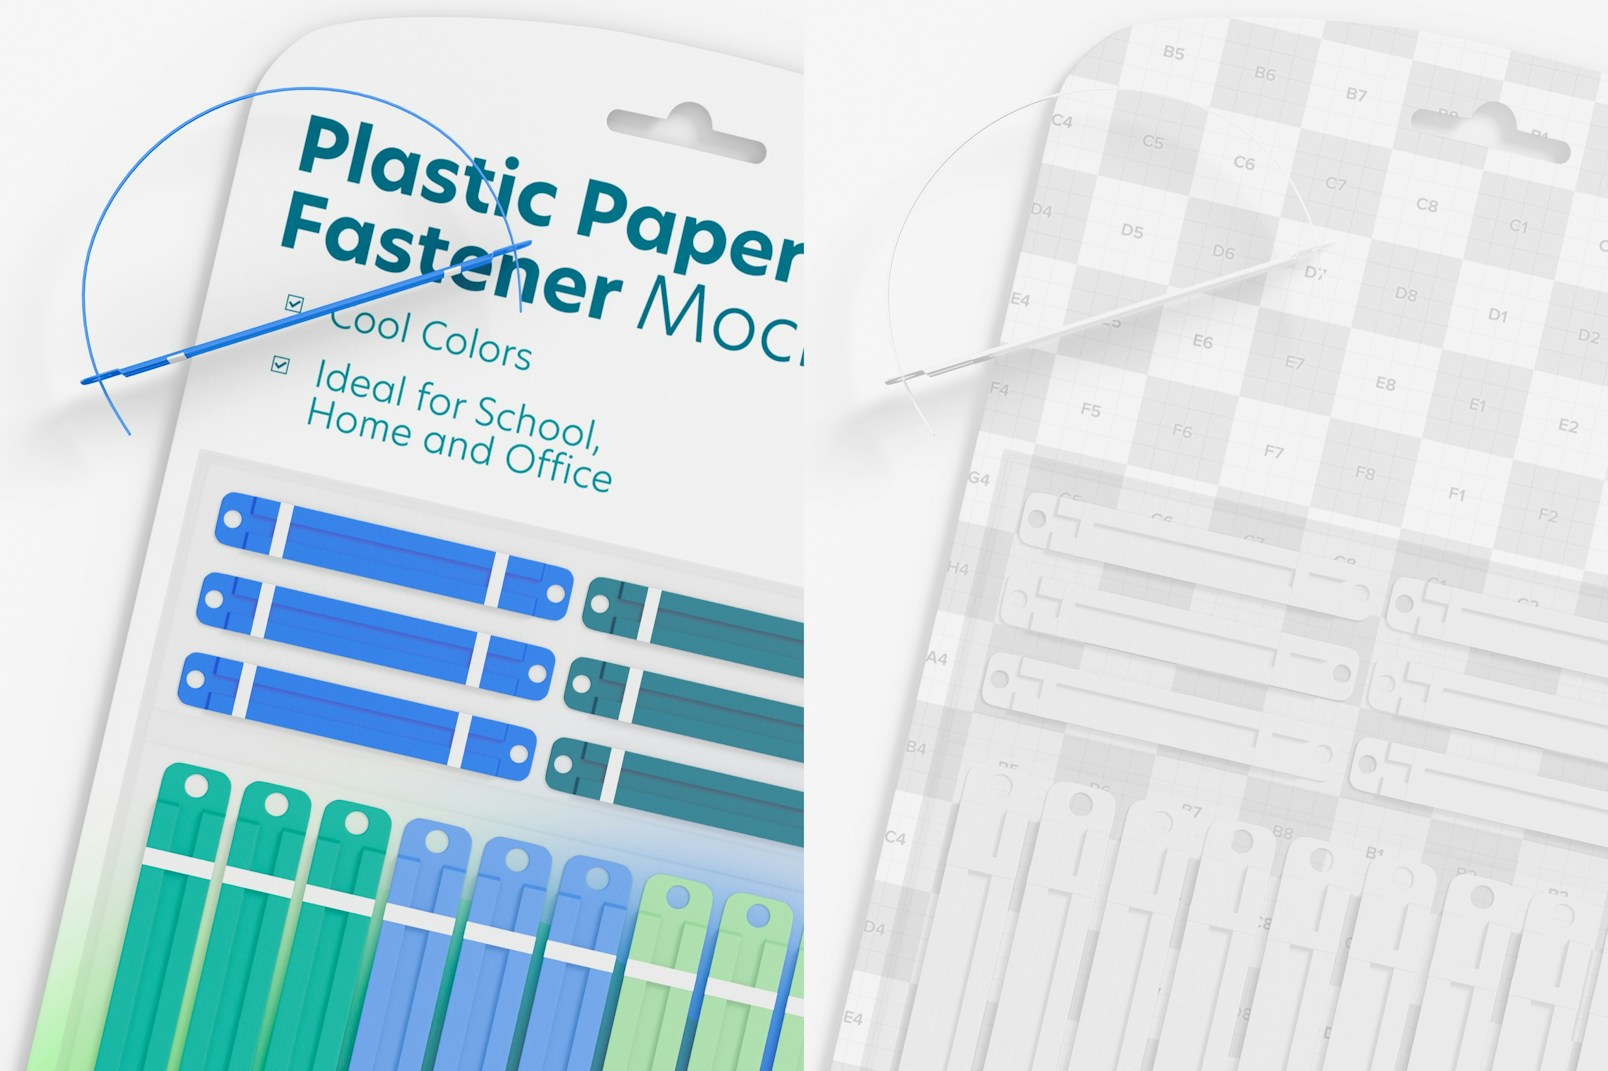 Plastic Paper Fastener Blister Mockup, Close Up